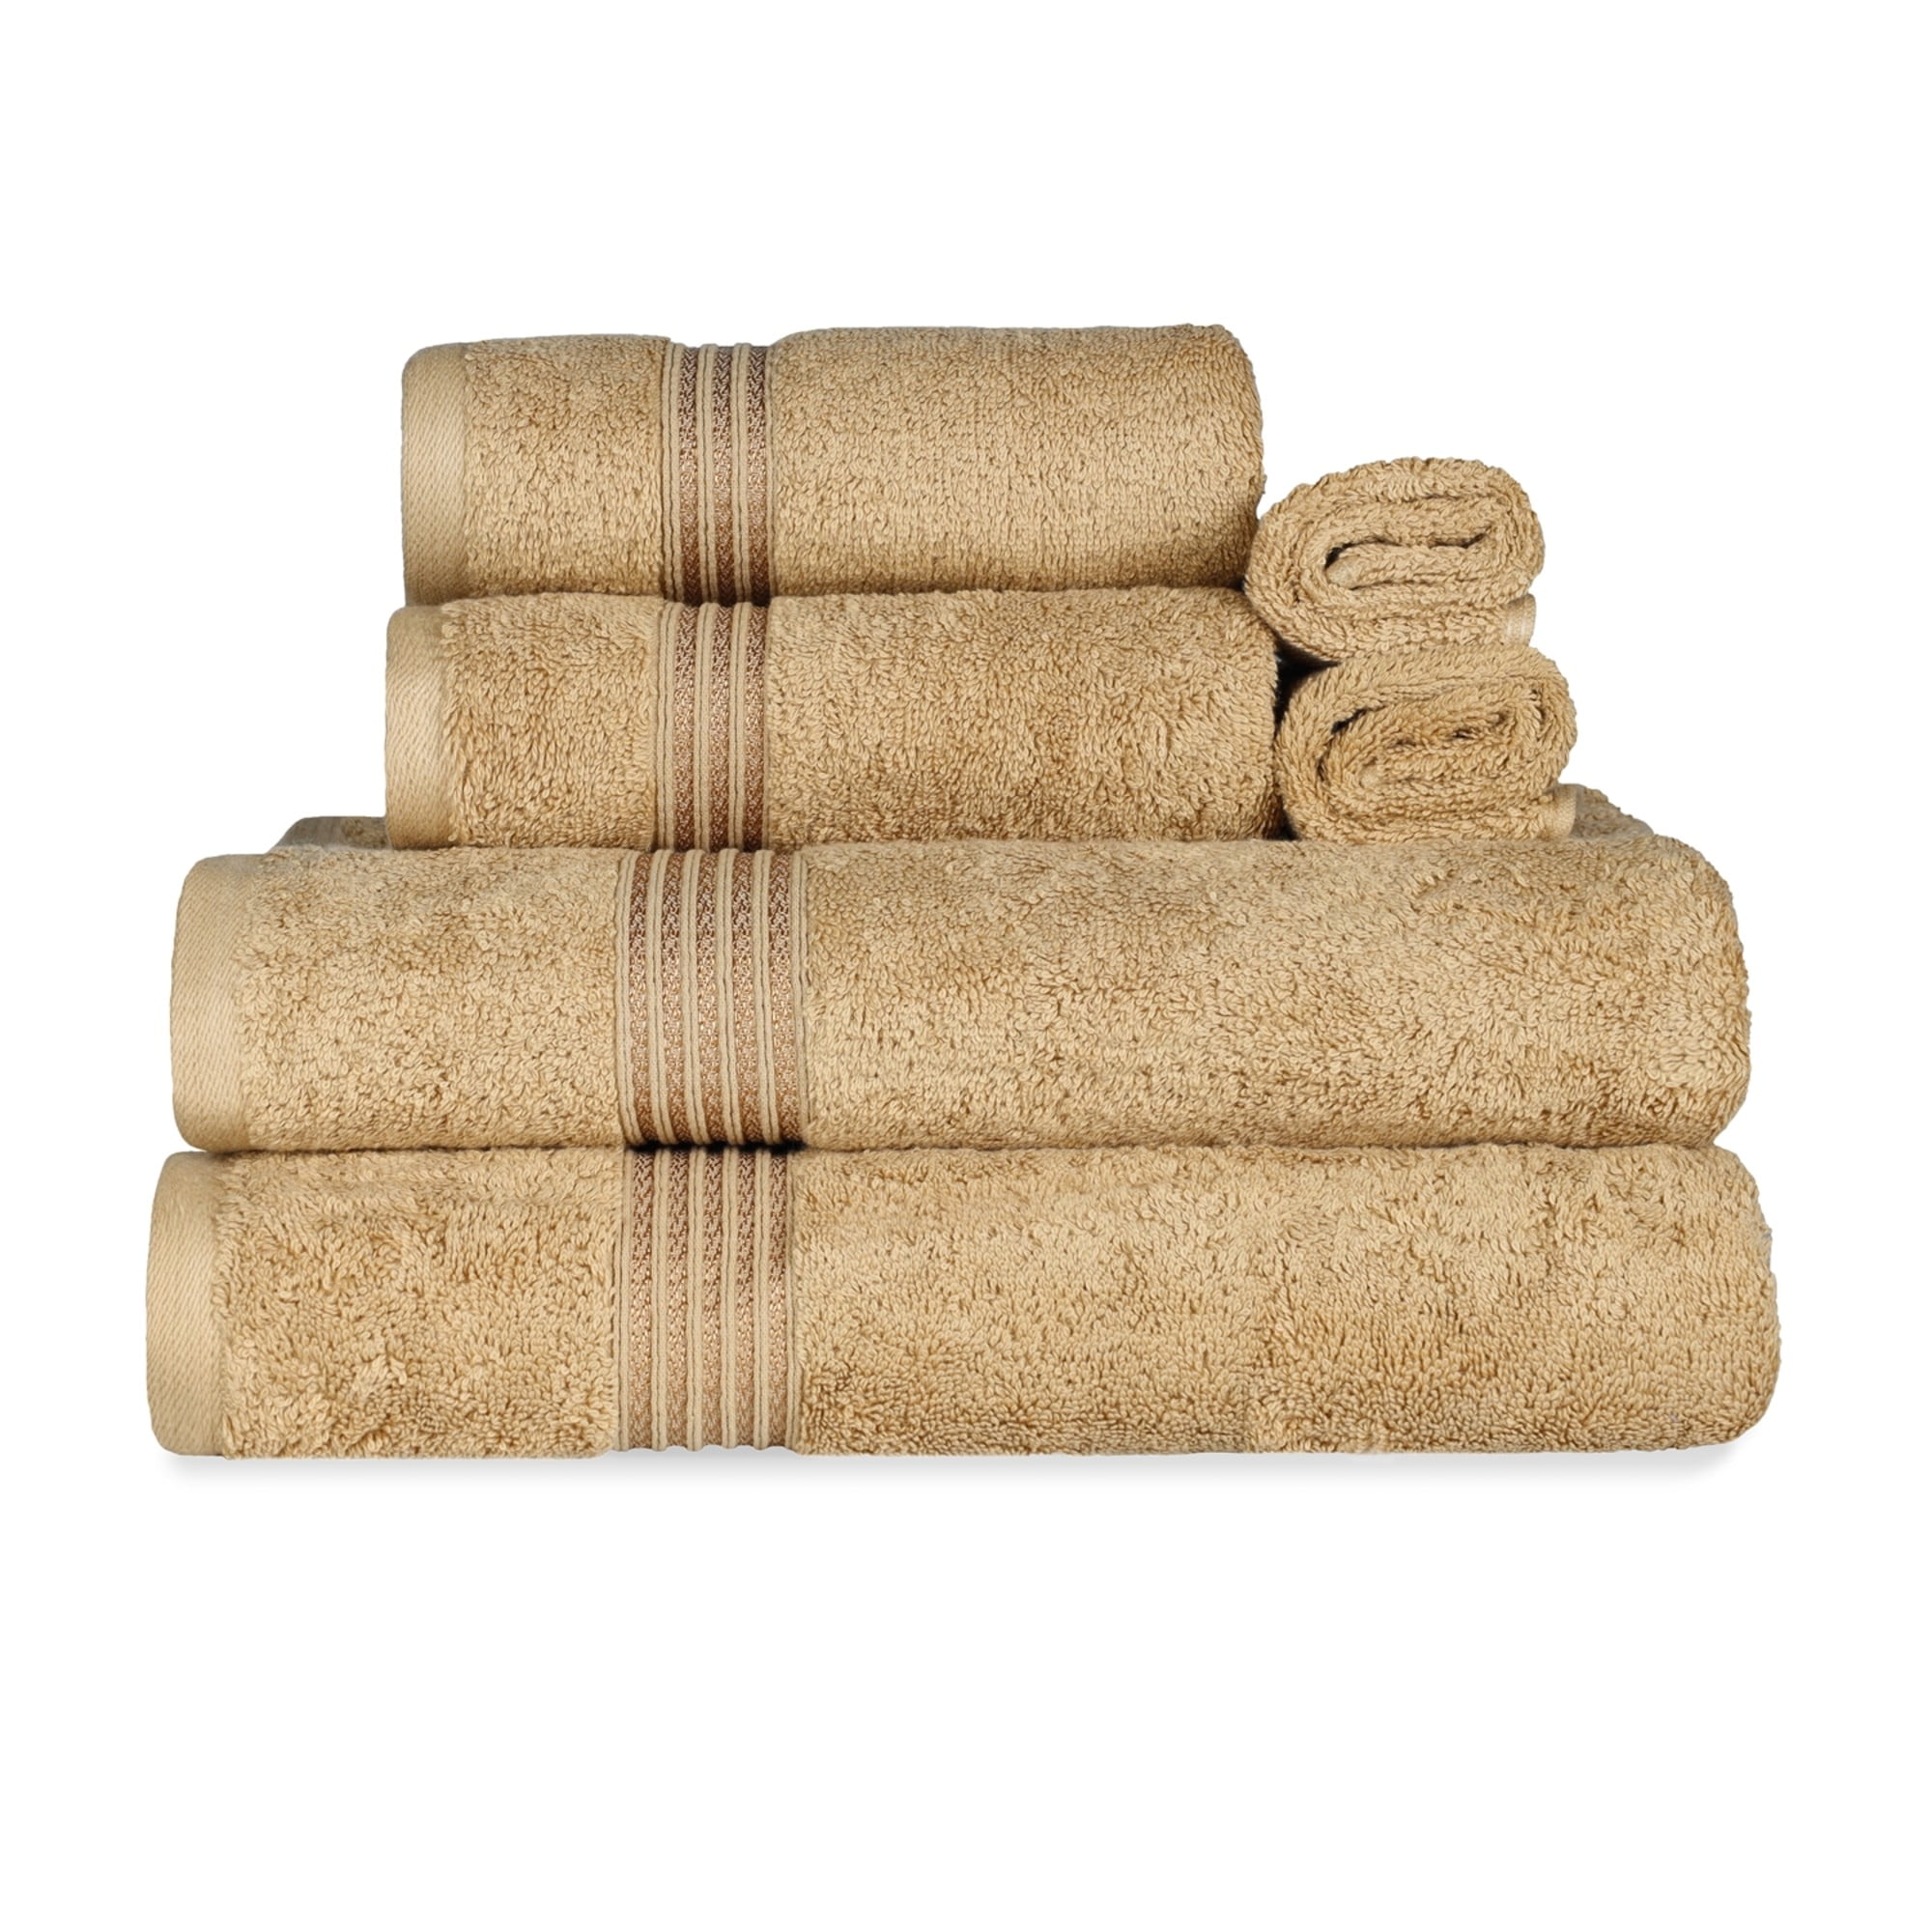 6-Piece Beige Extra Soft 100% Egyptian Cotton Bath Towel Set